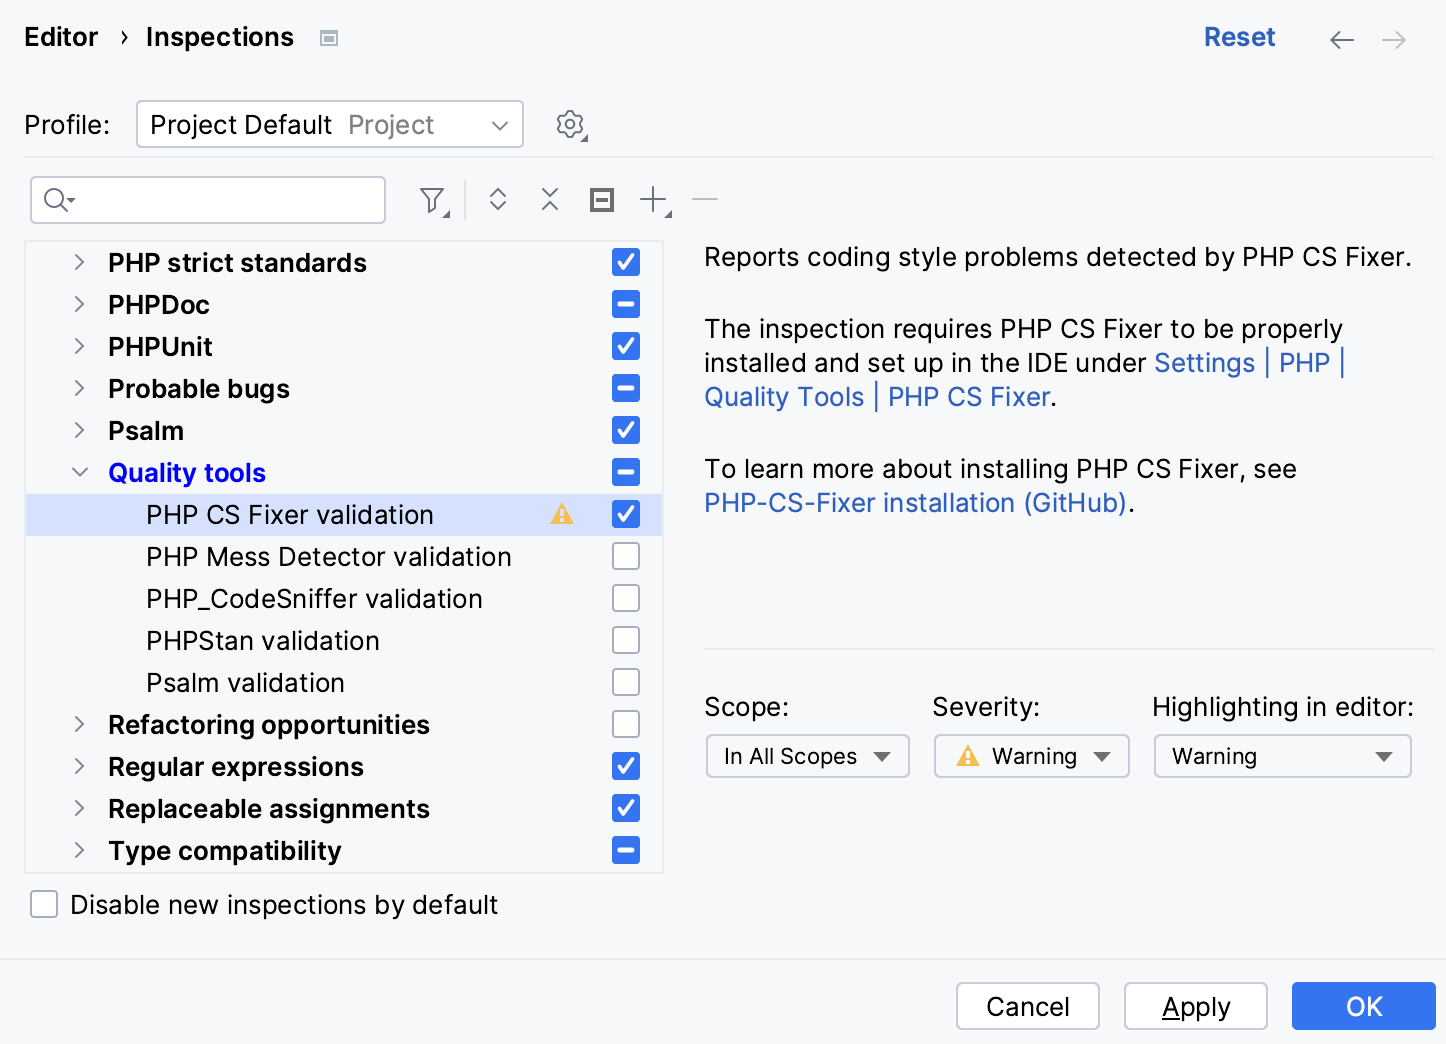 Select PHP CS Fixer validation checkbox